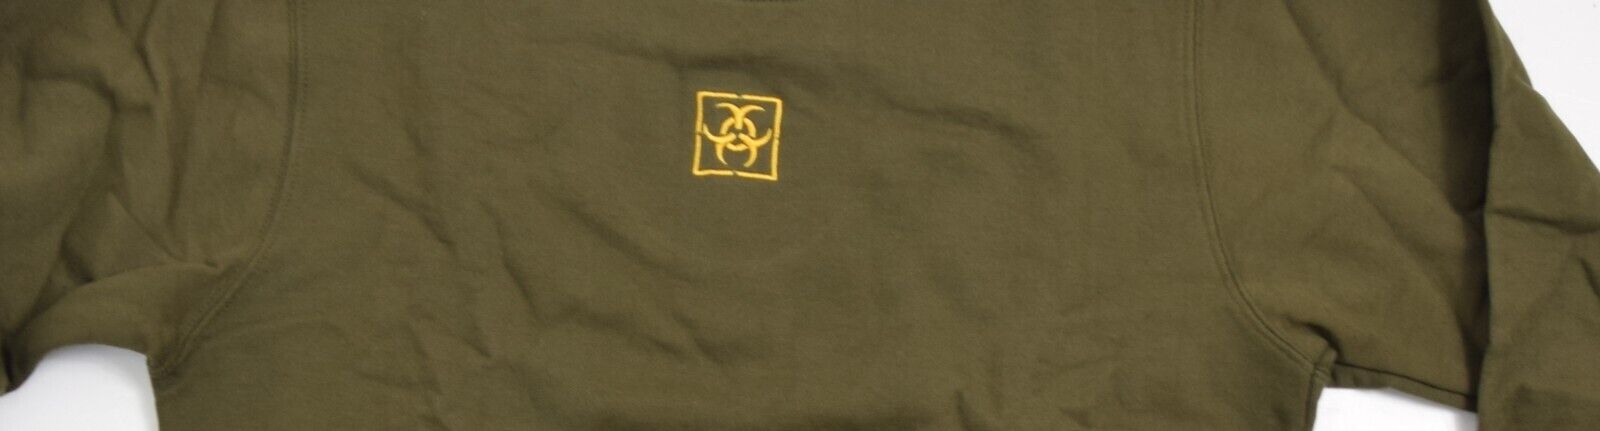 BIO HAZARD Unit Sweatshirt Army Military Olive Top Centre Logo BIOHAZARD Logo